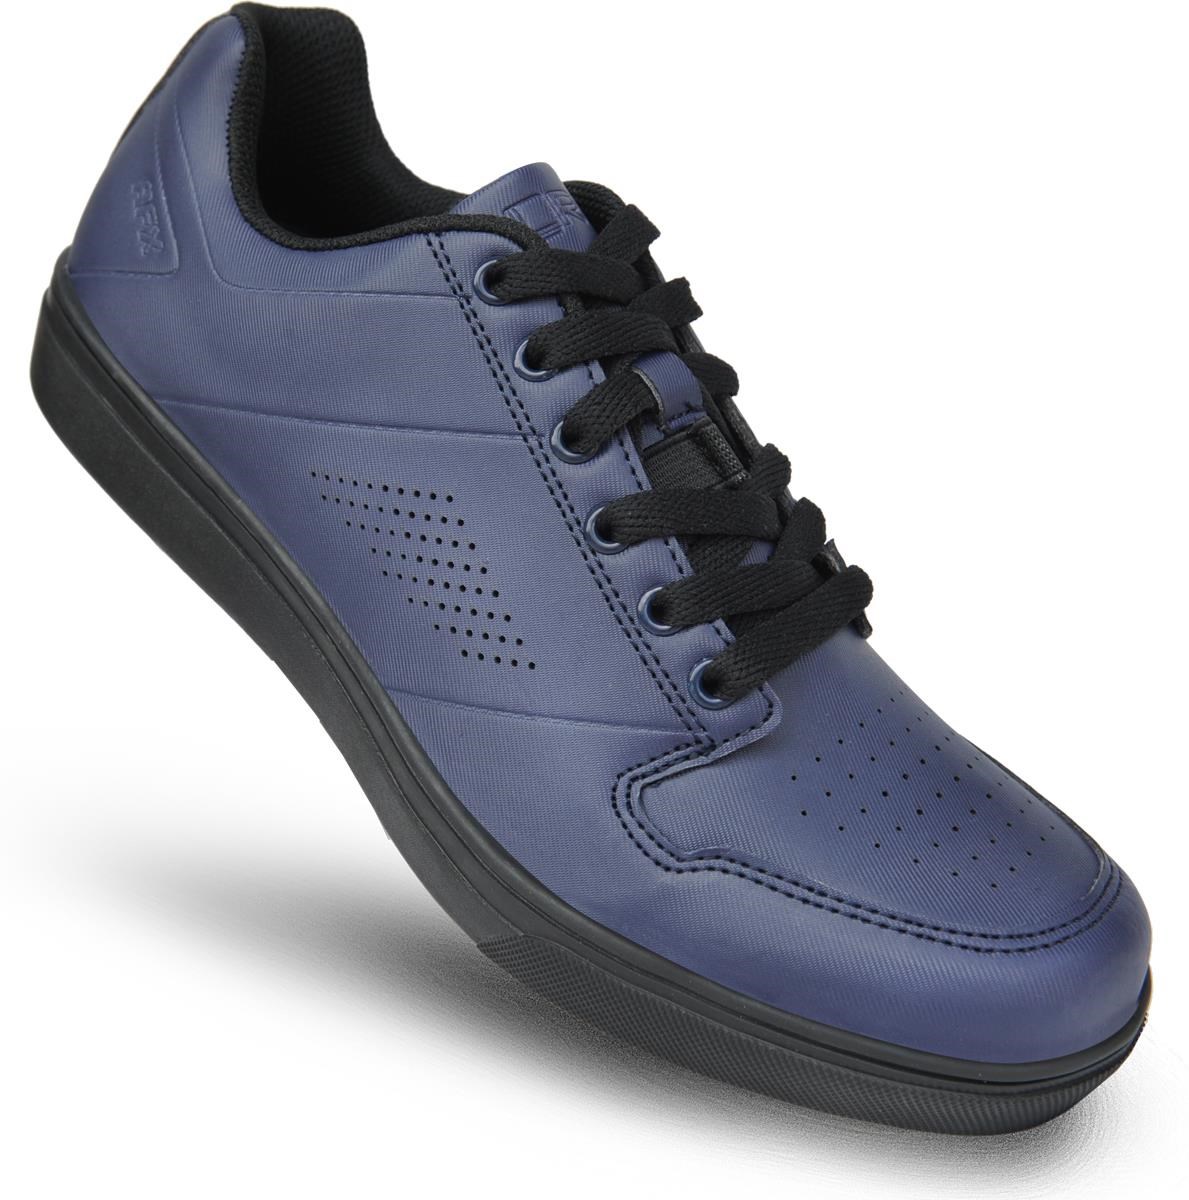 FLR AFX Active Flat Line Trail Shoes product image